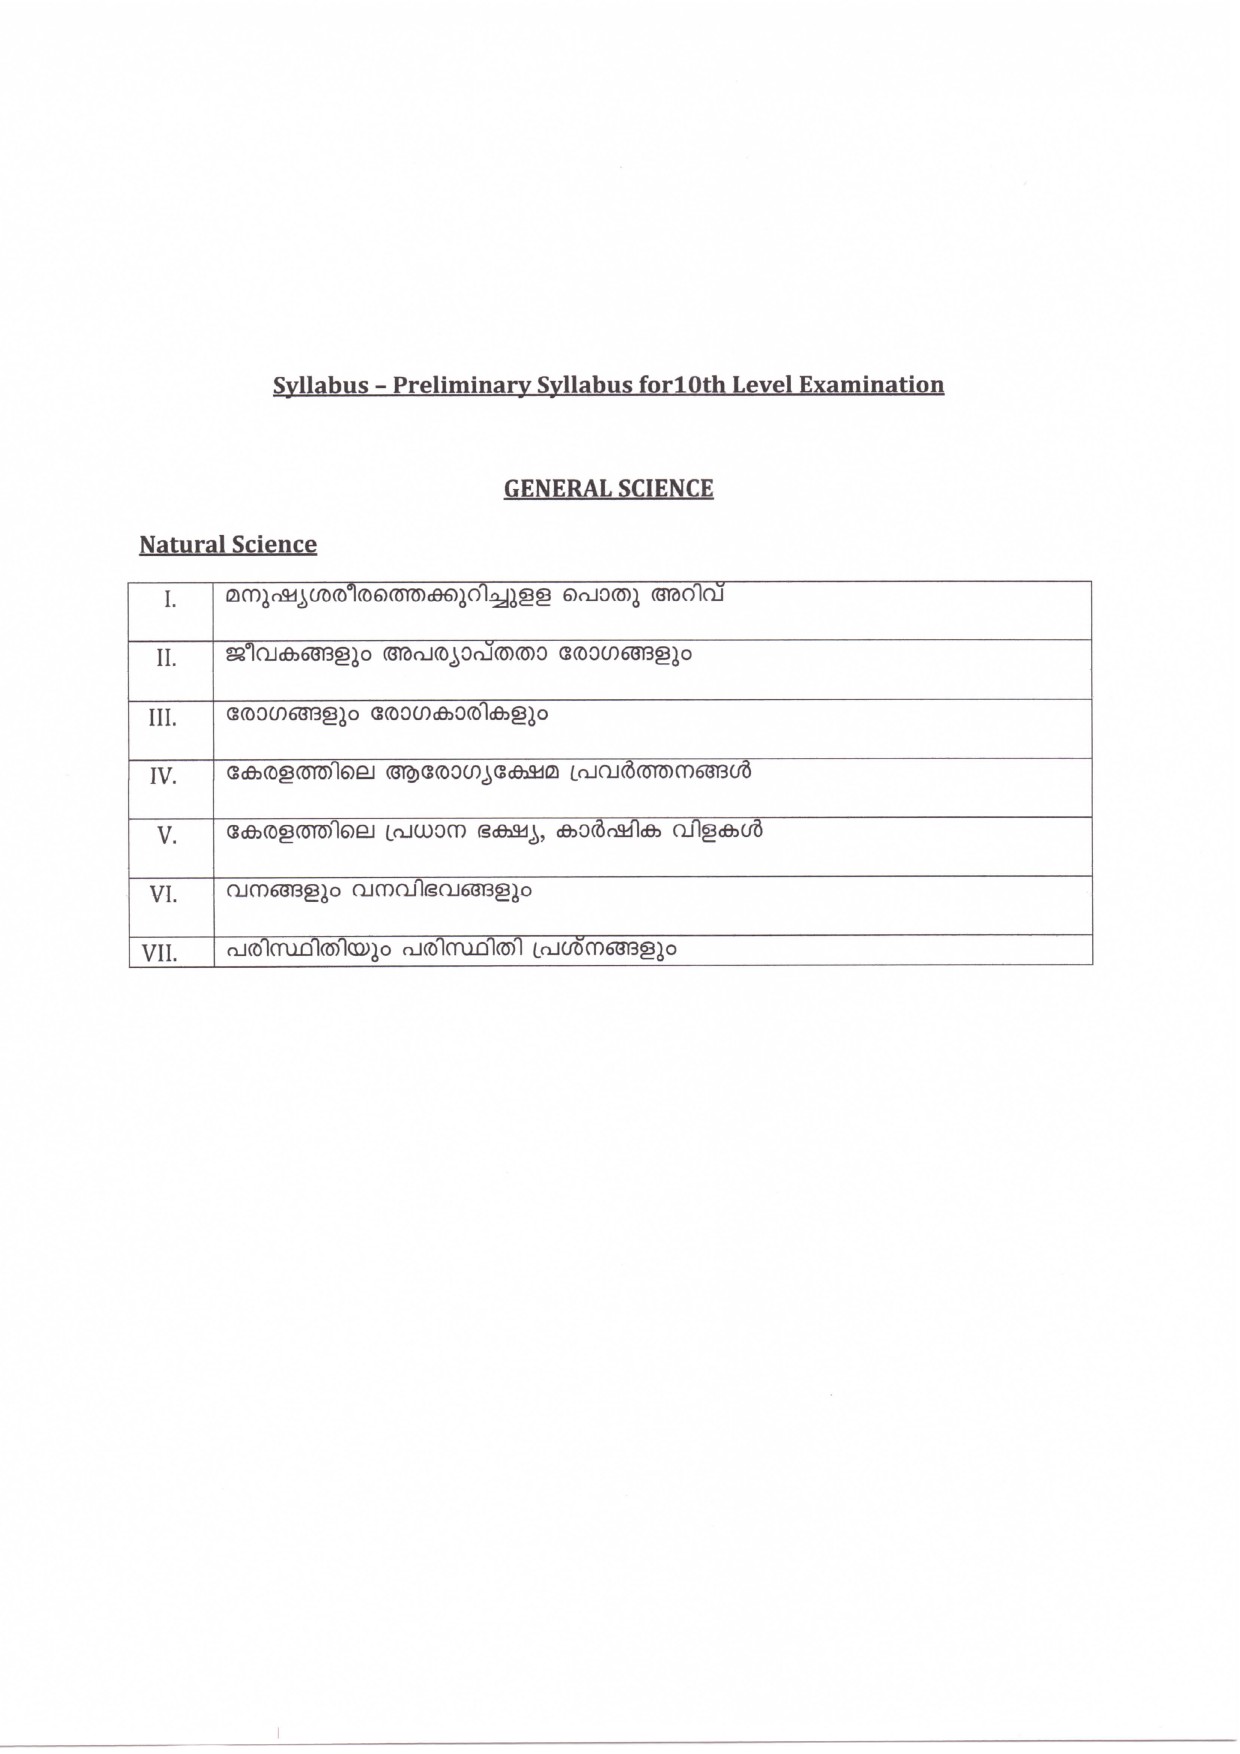 KPSC Preliminary Syllabus For 10th Level Examination - Notification Image 2